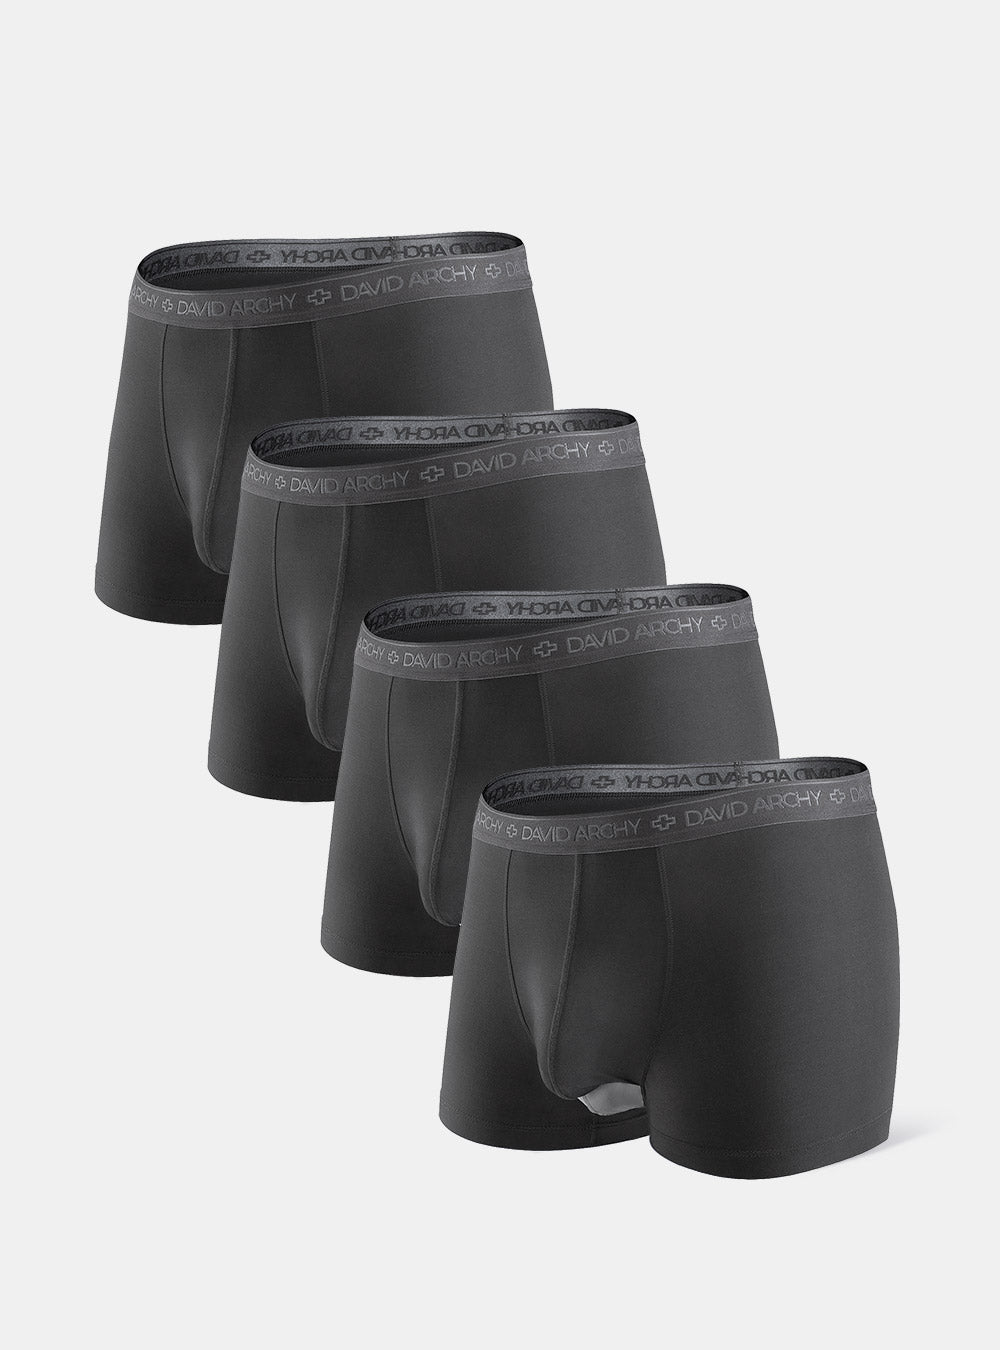 Akiihool Mens' Underwear Men's Dual Pouch Underwear Micro Modal Trunks  Separate Pouches with Fly (Grey,XXL) 